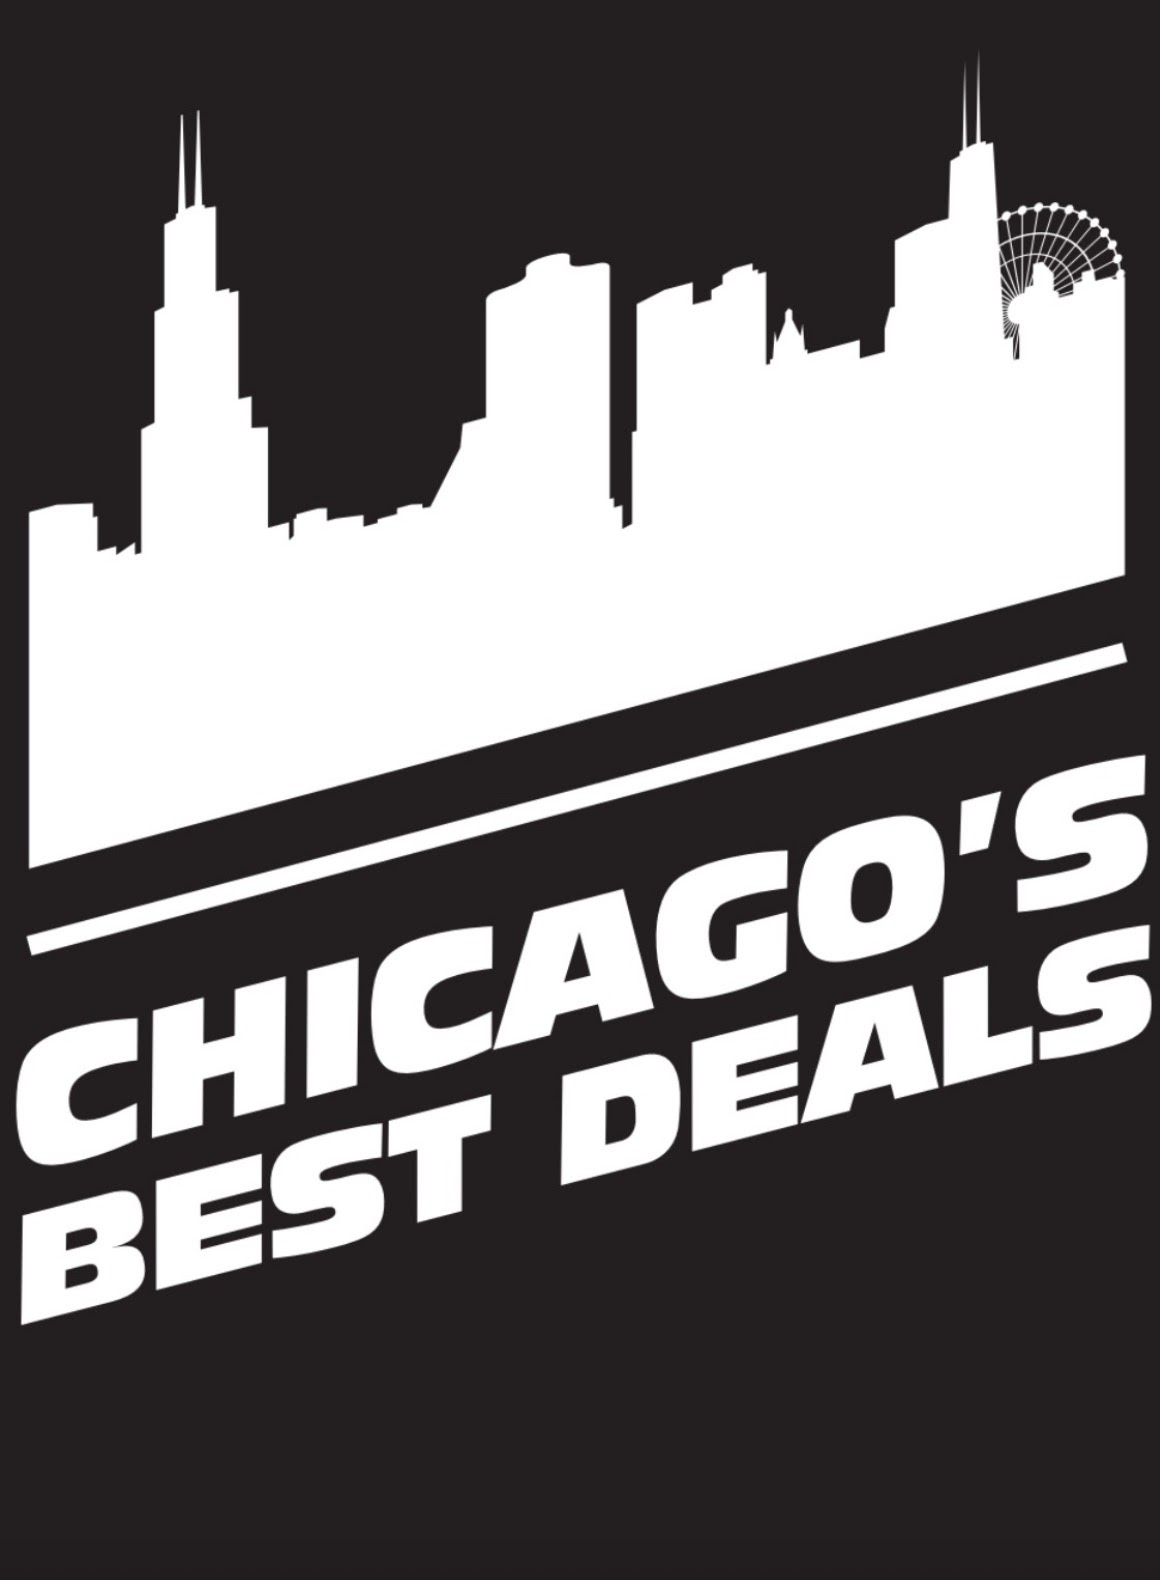 Chicago's best deals inc